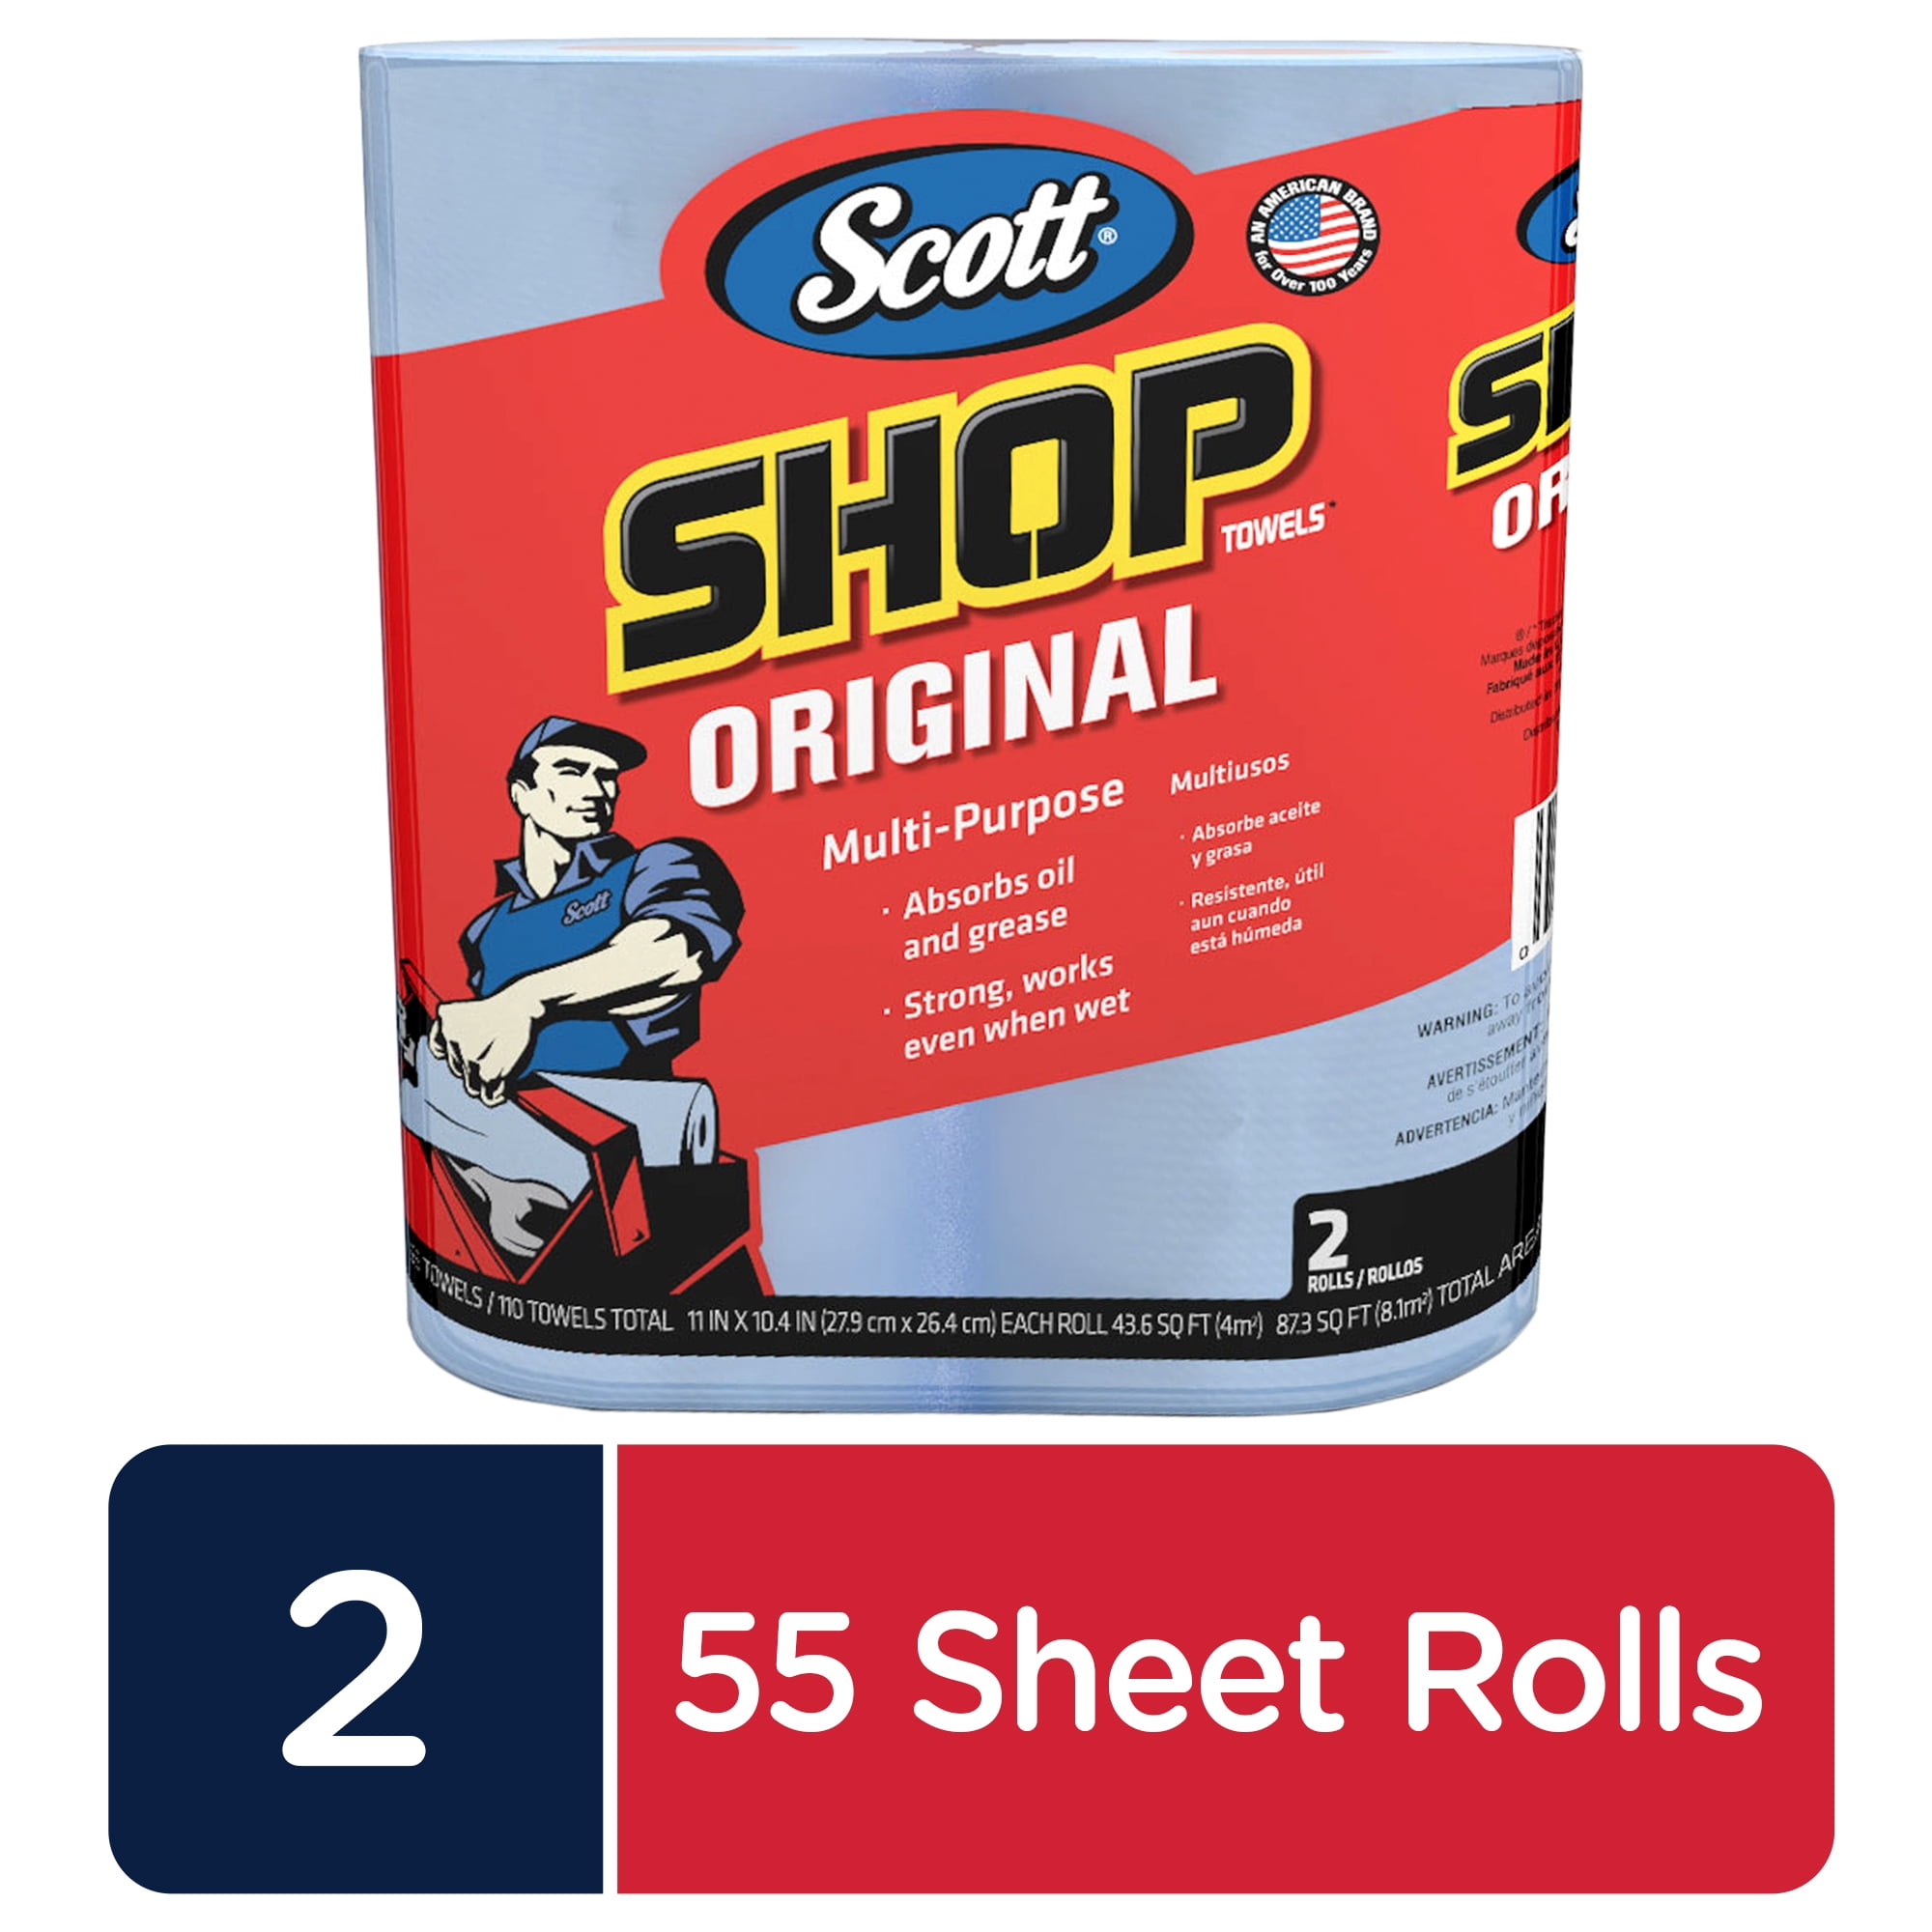 SCOTT Professional Multi Purpose Shop Paper Towels 55 Sheets Roll 2 Rolls 